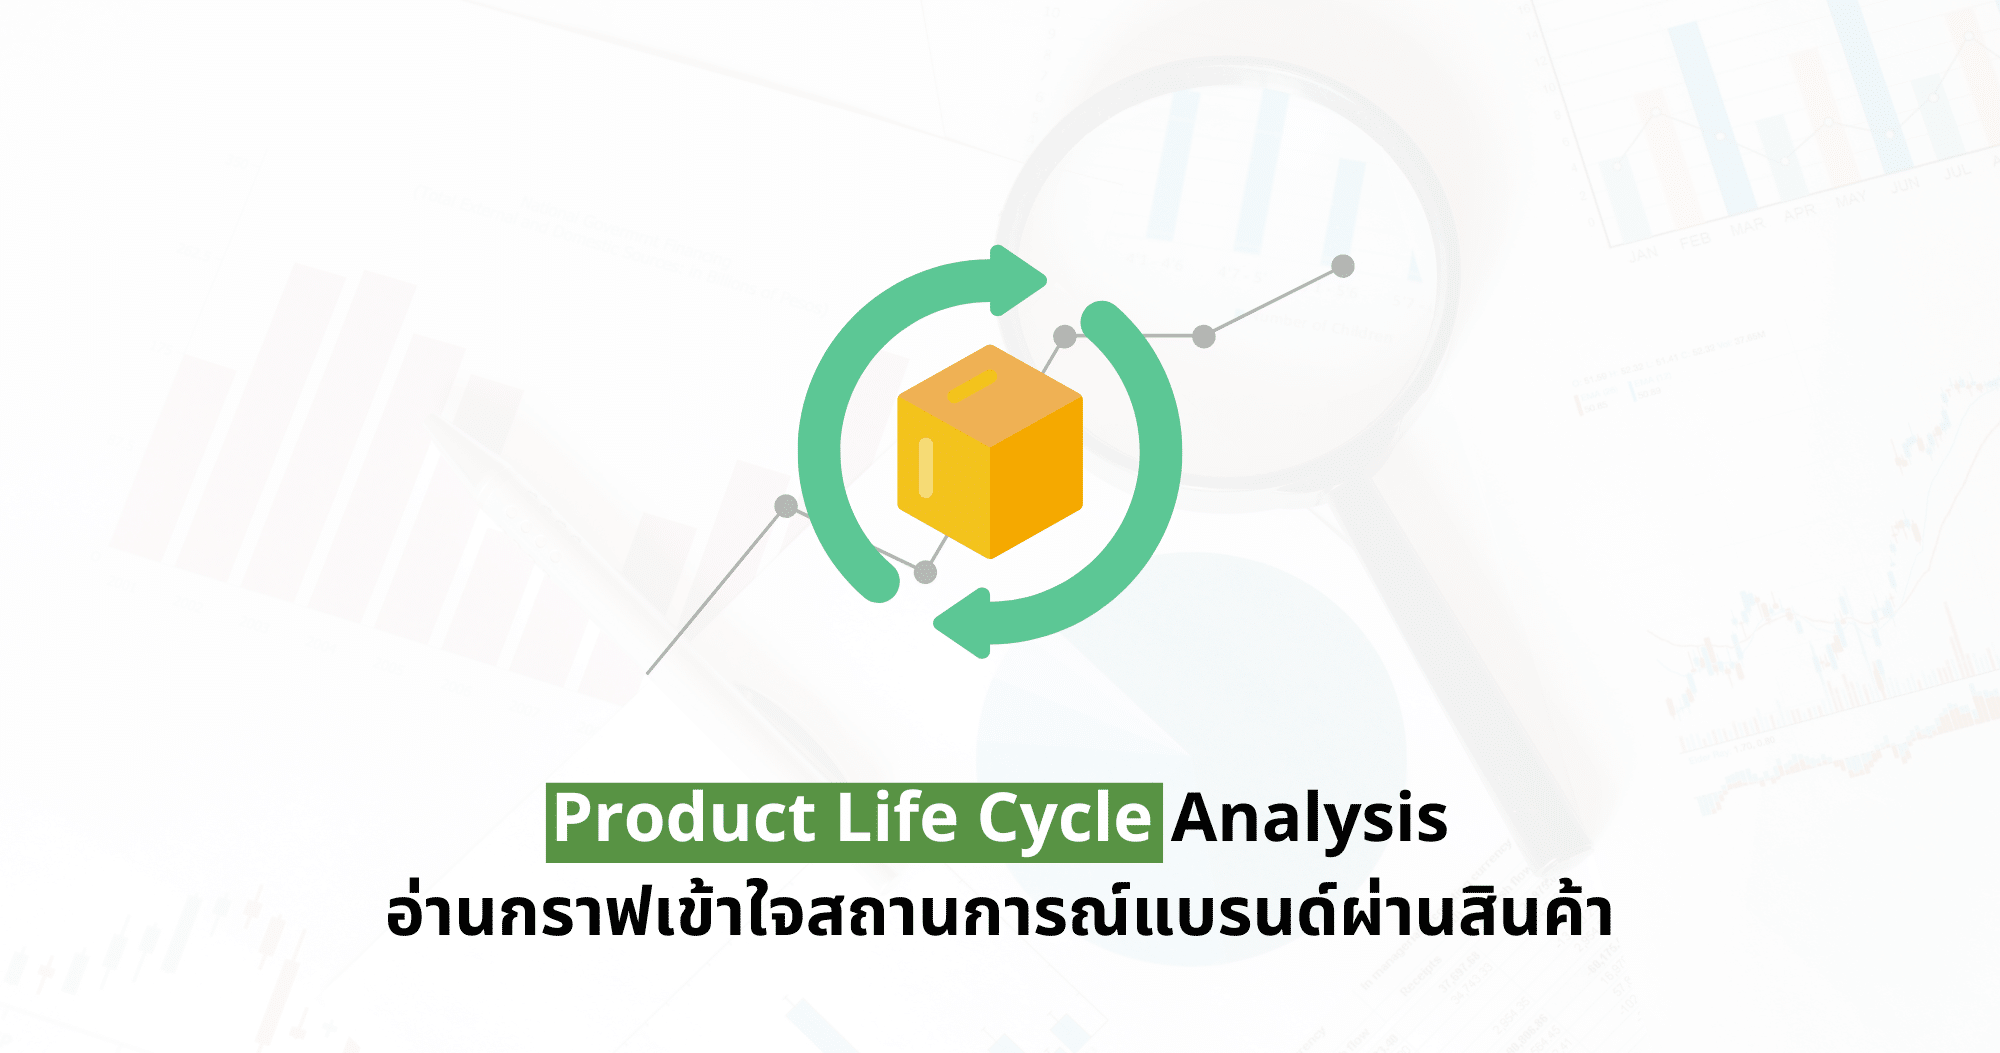 Product Life Cycle Analysis แค่เข้าใจสินค้าก็เข้าใจสถานการณ์แบรนด์